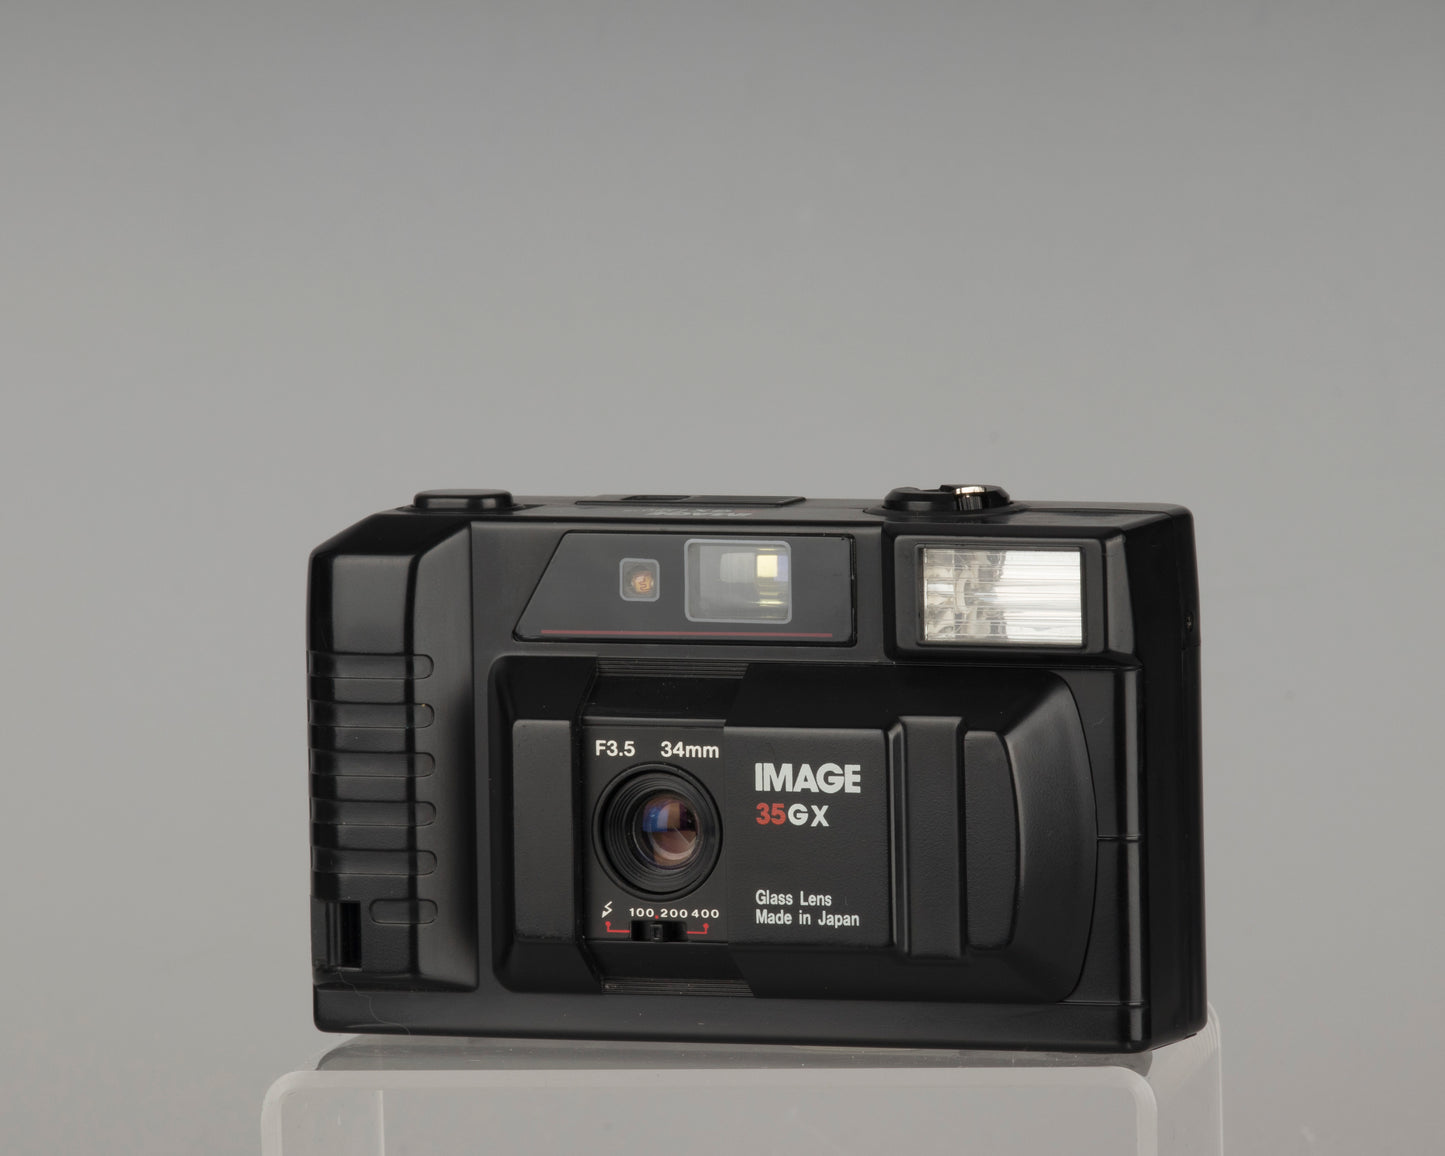 Image 35GX 35mm camera